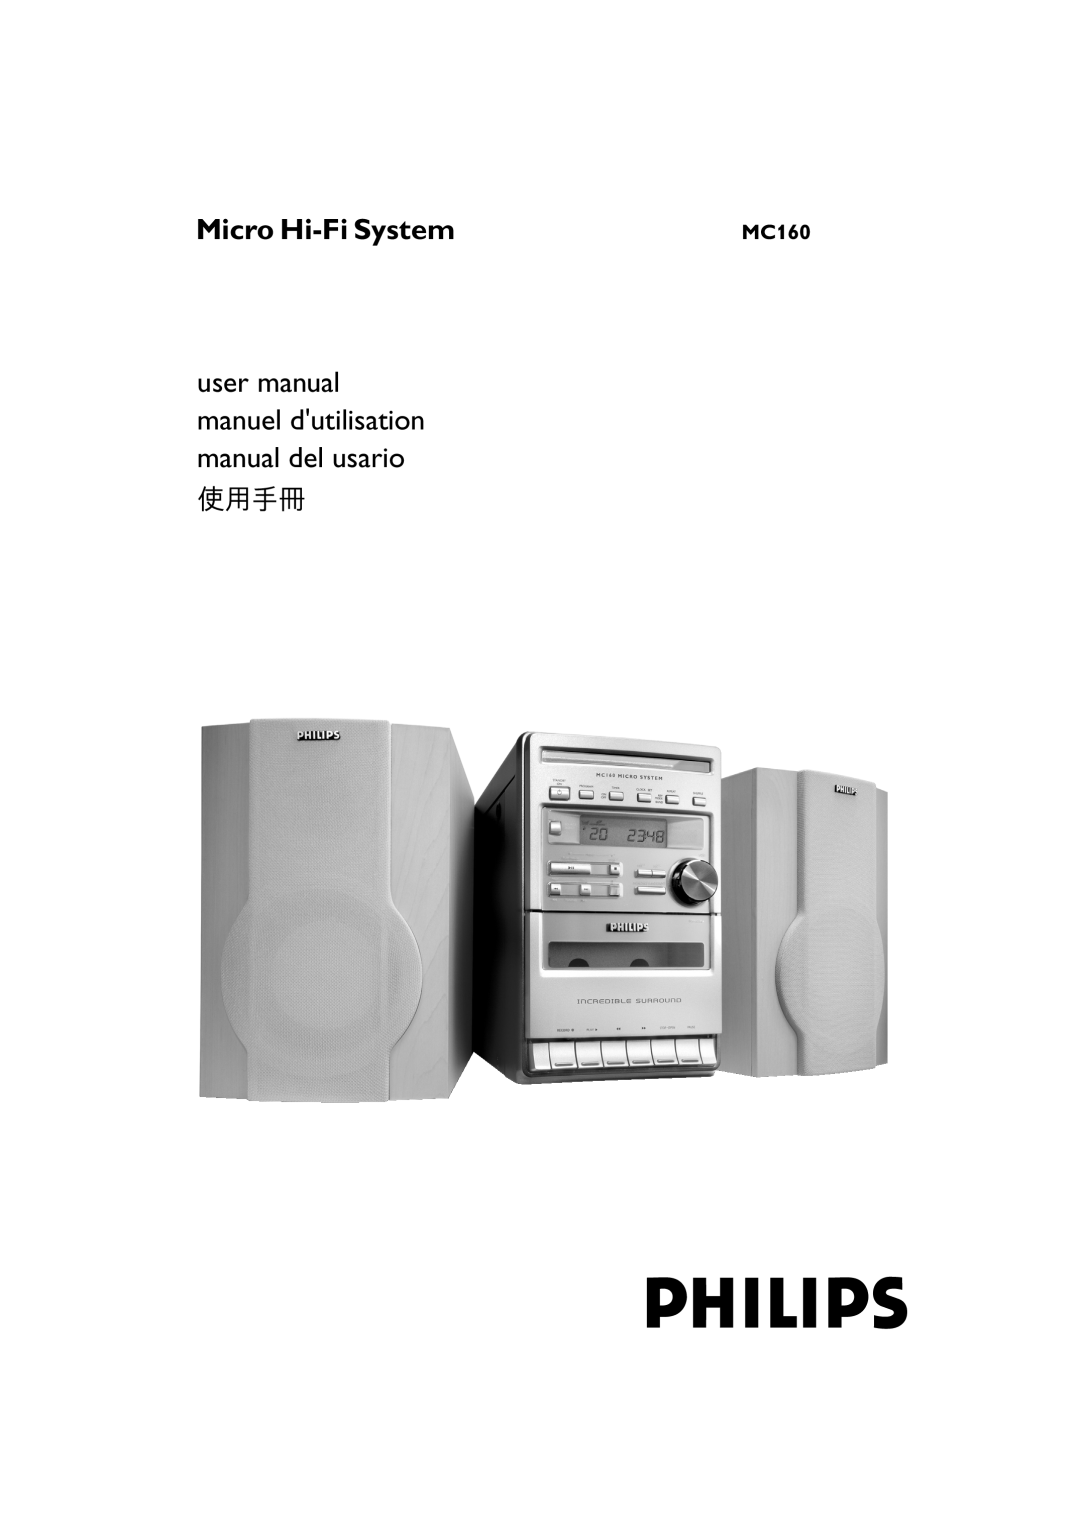 Philips MC160 user manual Micro Hi-FiSystem 